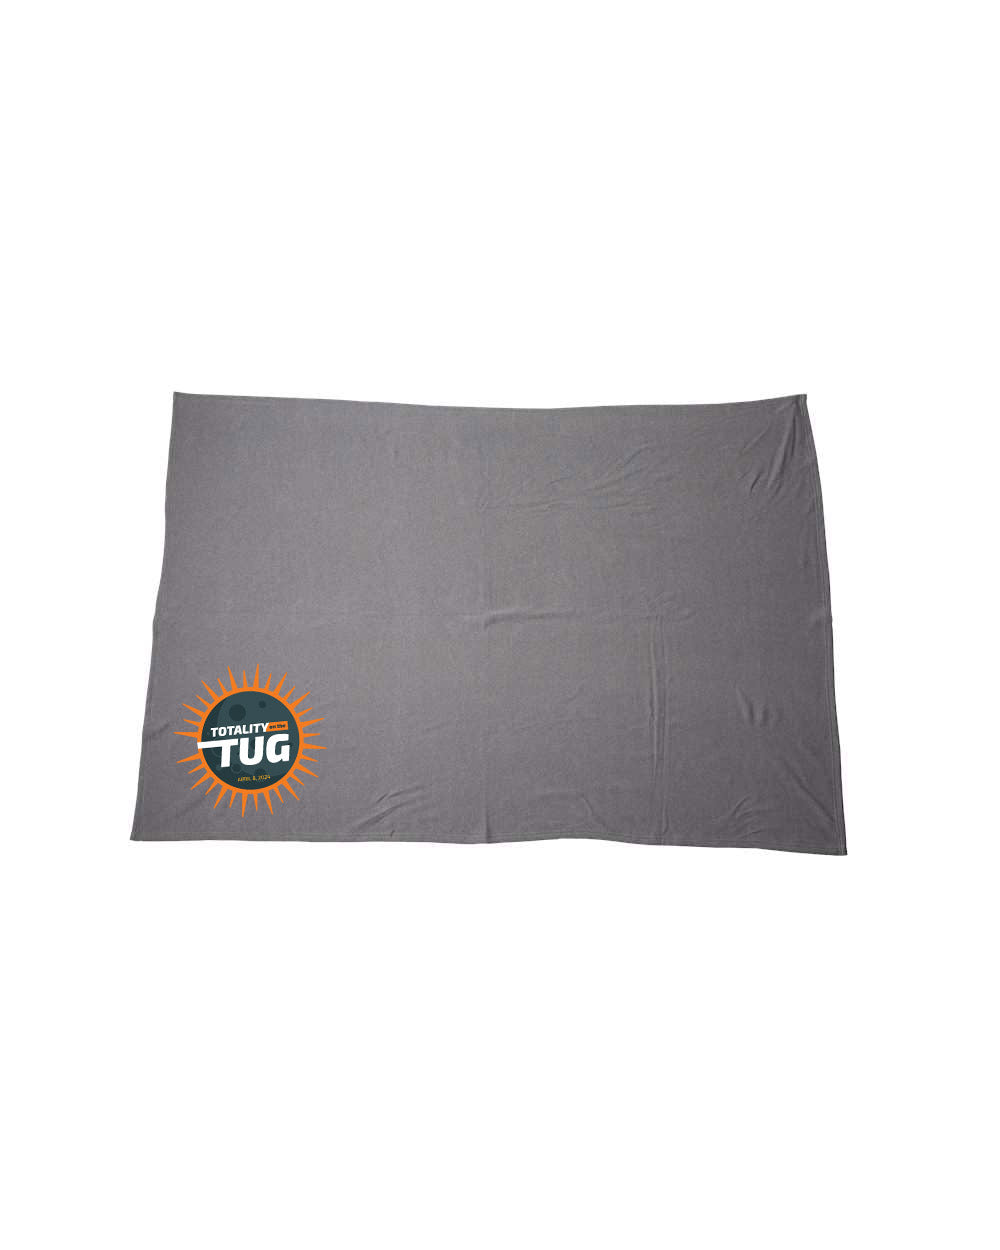 Totality on the Tug - Solar Eclipse Fleece Blanket